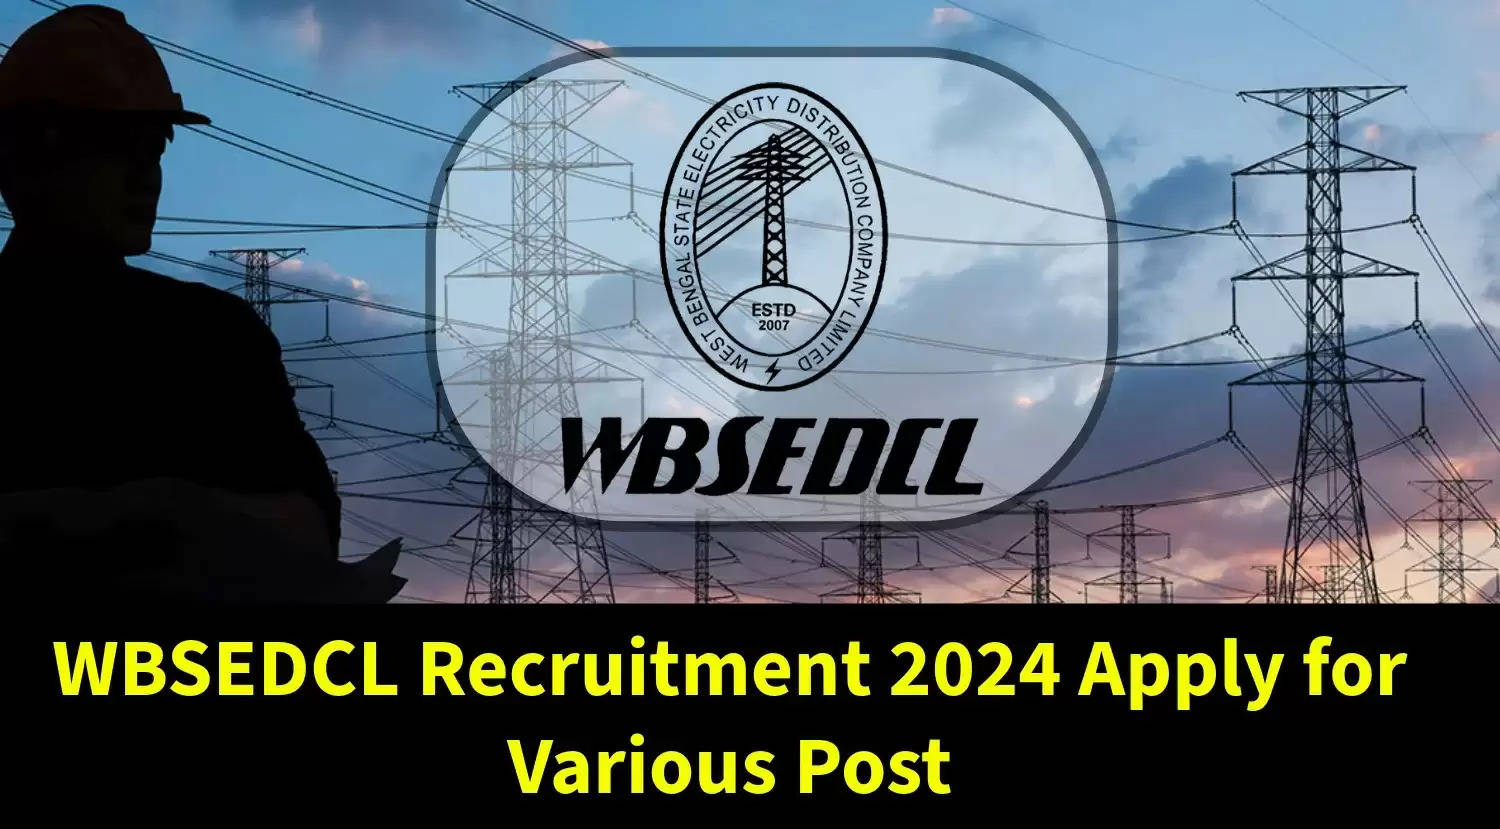 WBSETCL Recruitment 2022 Out - Apply 414 Junior Engineer Jobs